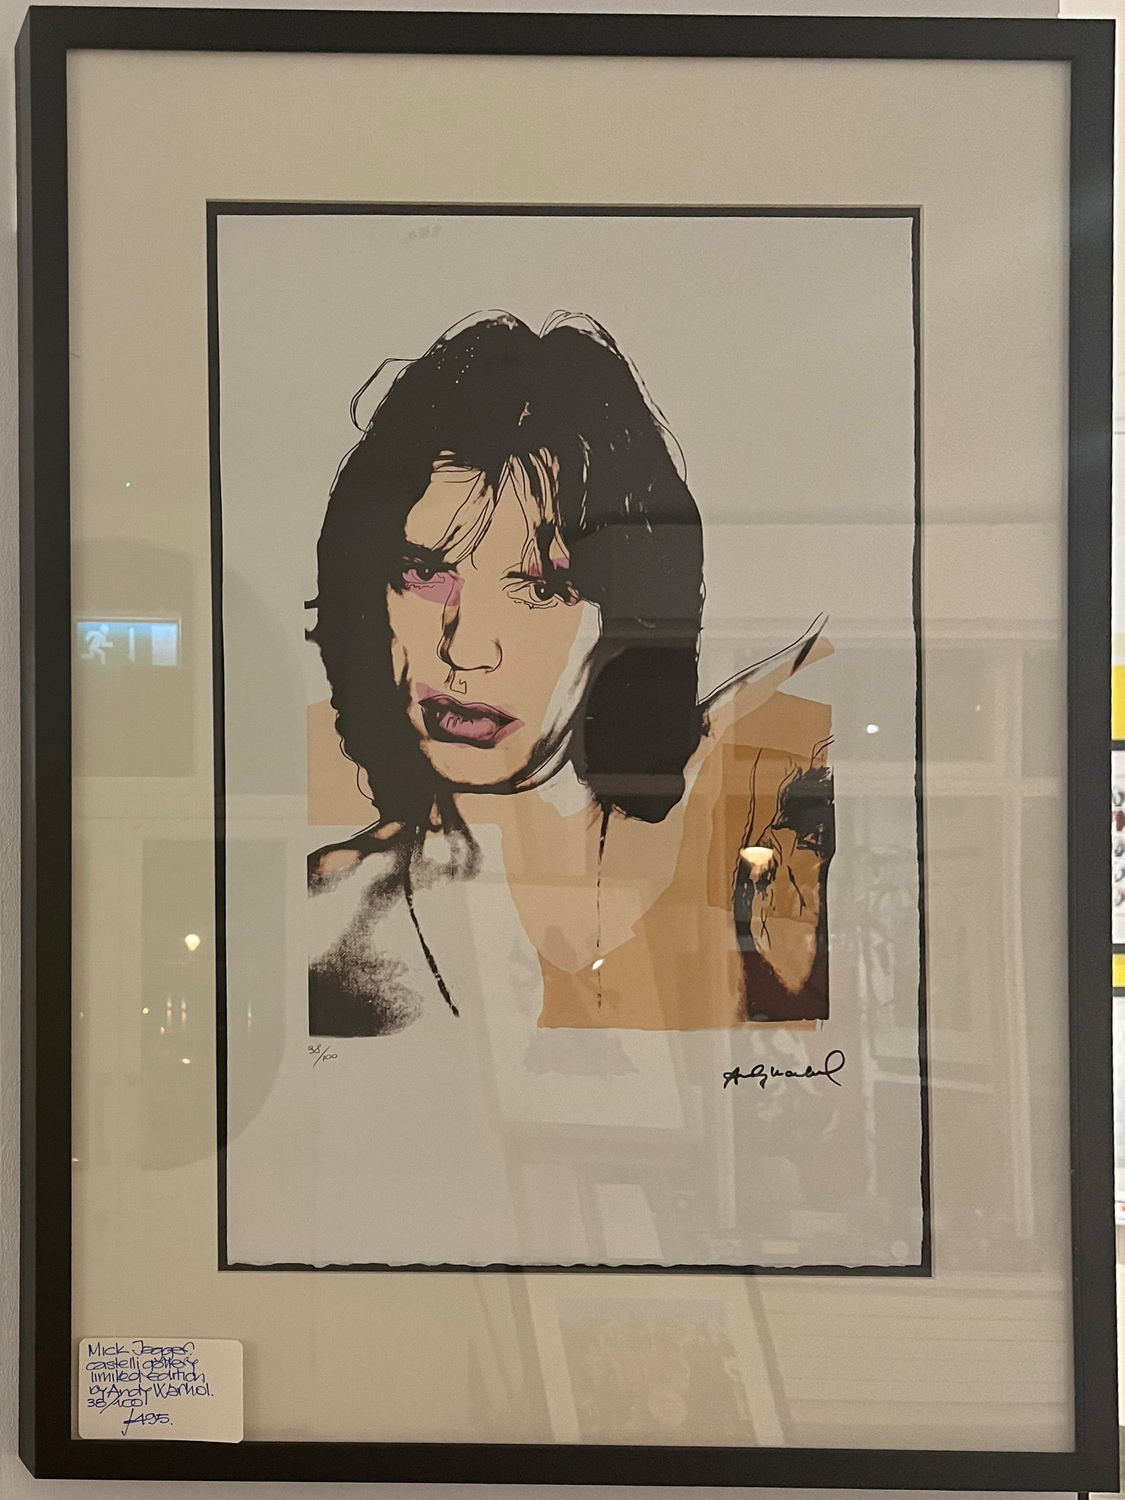 Mick Jagger Limited Edition Andy Warhol Print